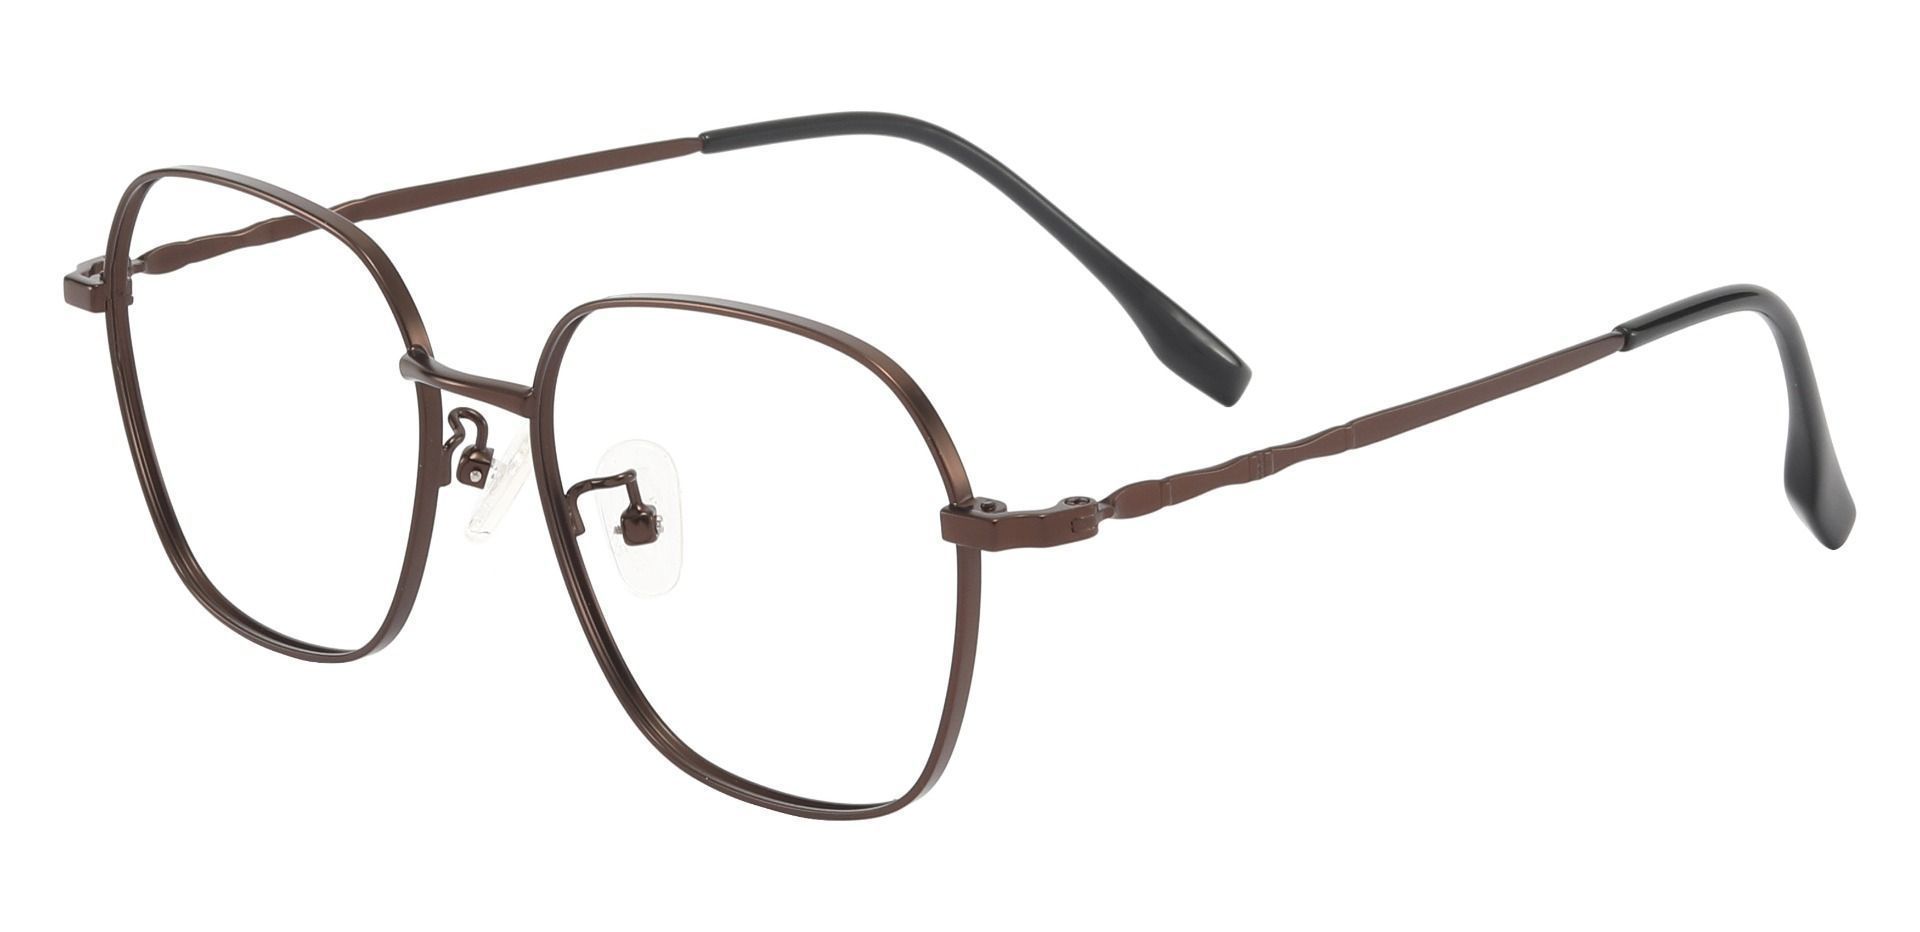 Crest Geometric Progressive Glasses - Brown